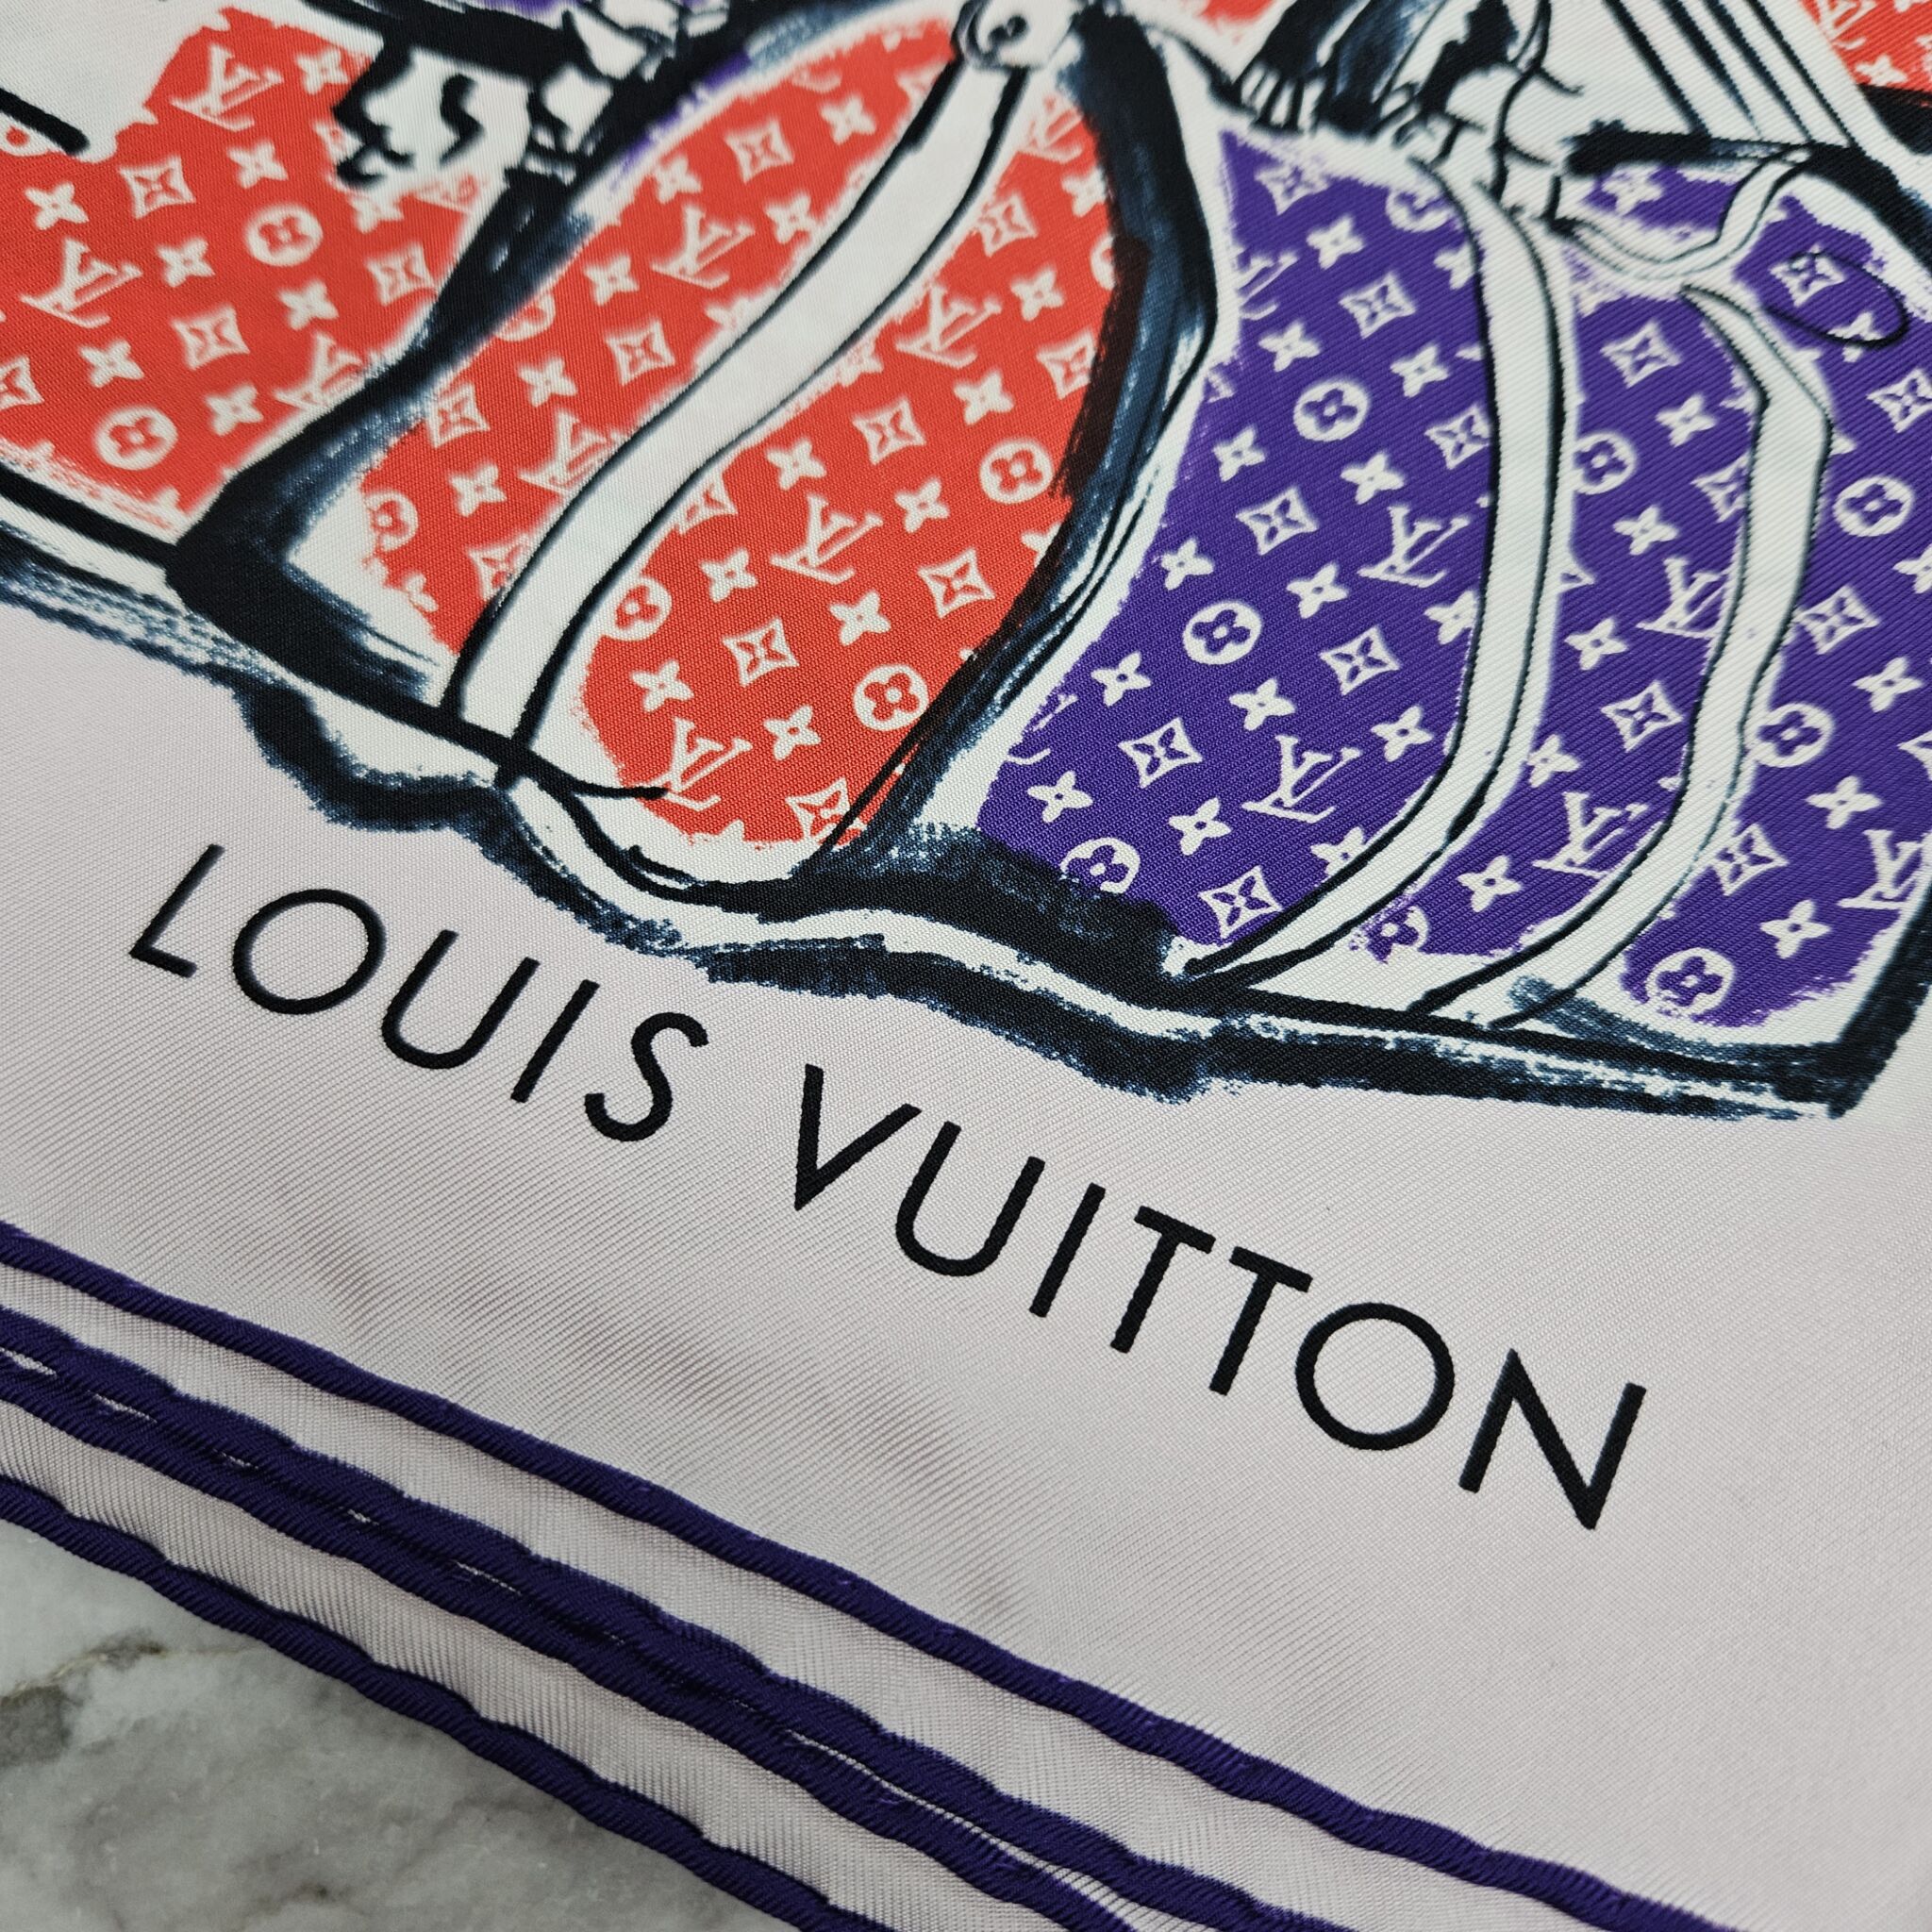 Louis Vuitton Pattern Print, Red Monogram Trunks Silk Scarf